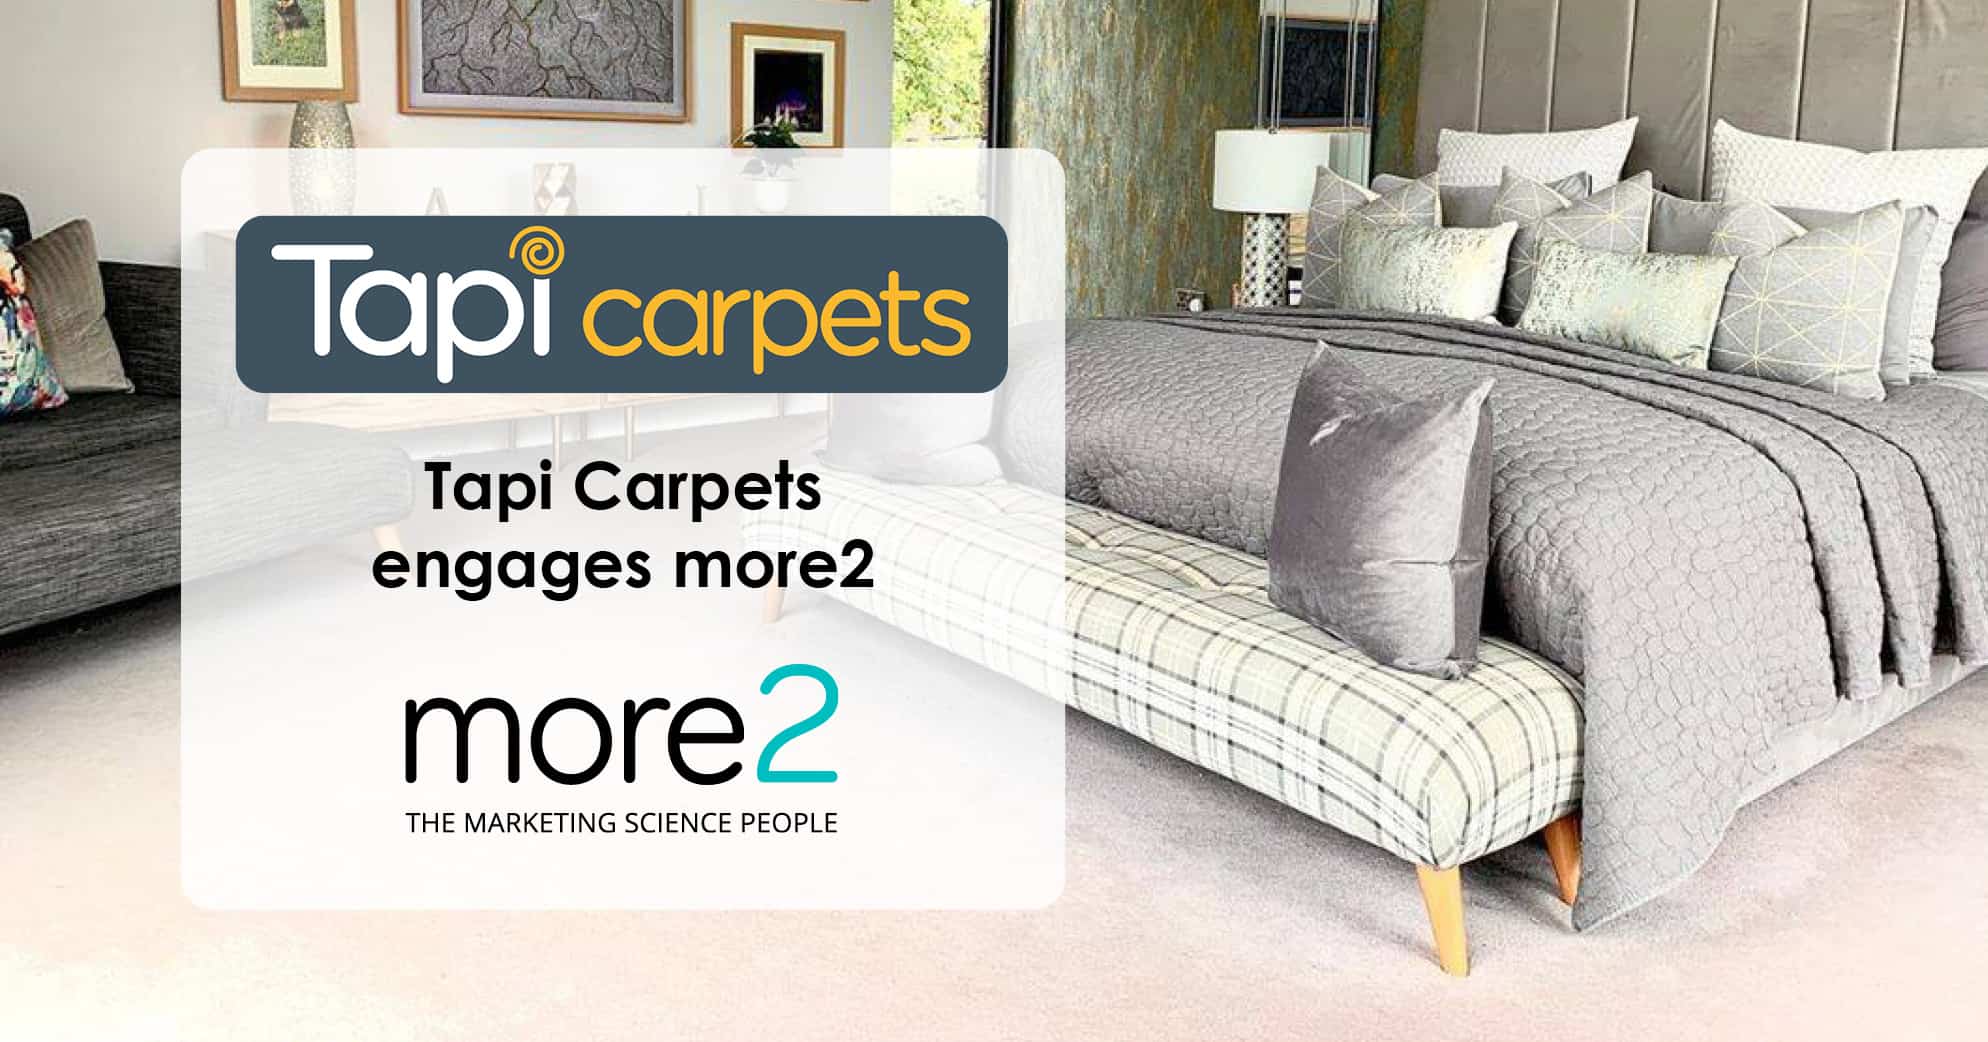 Tapi Carpets engages more2